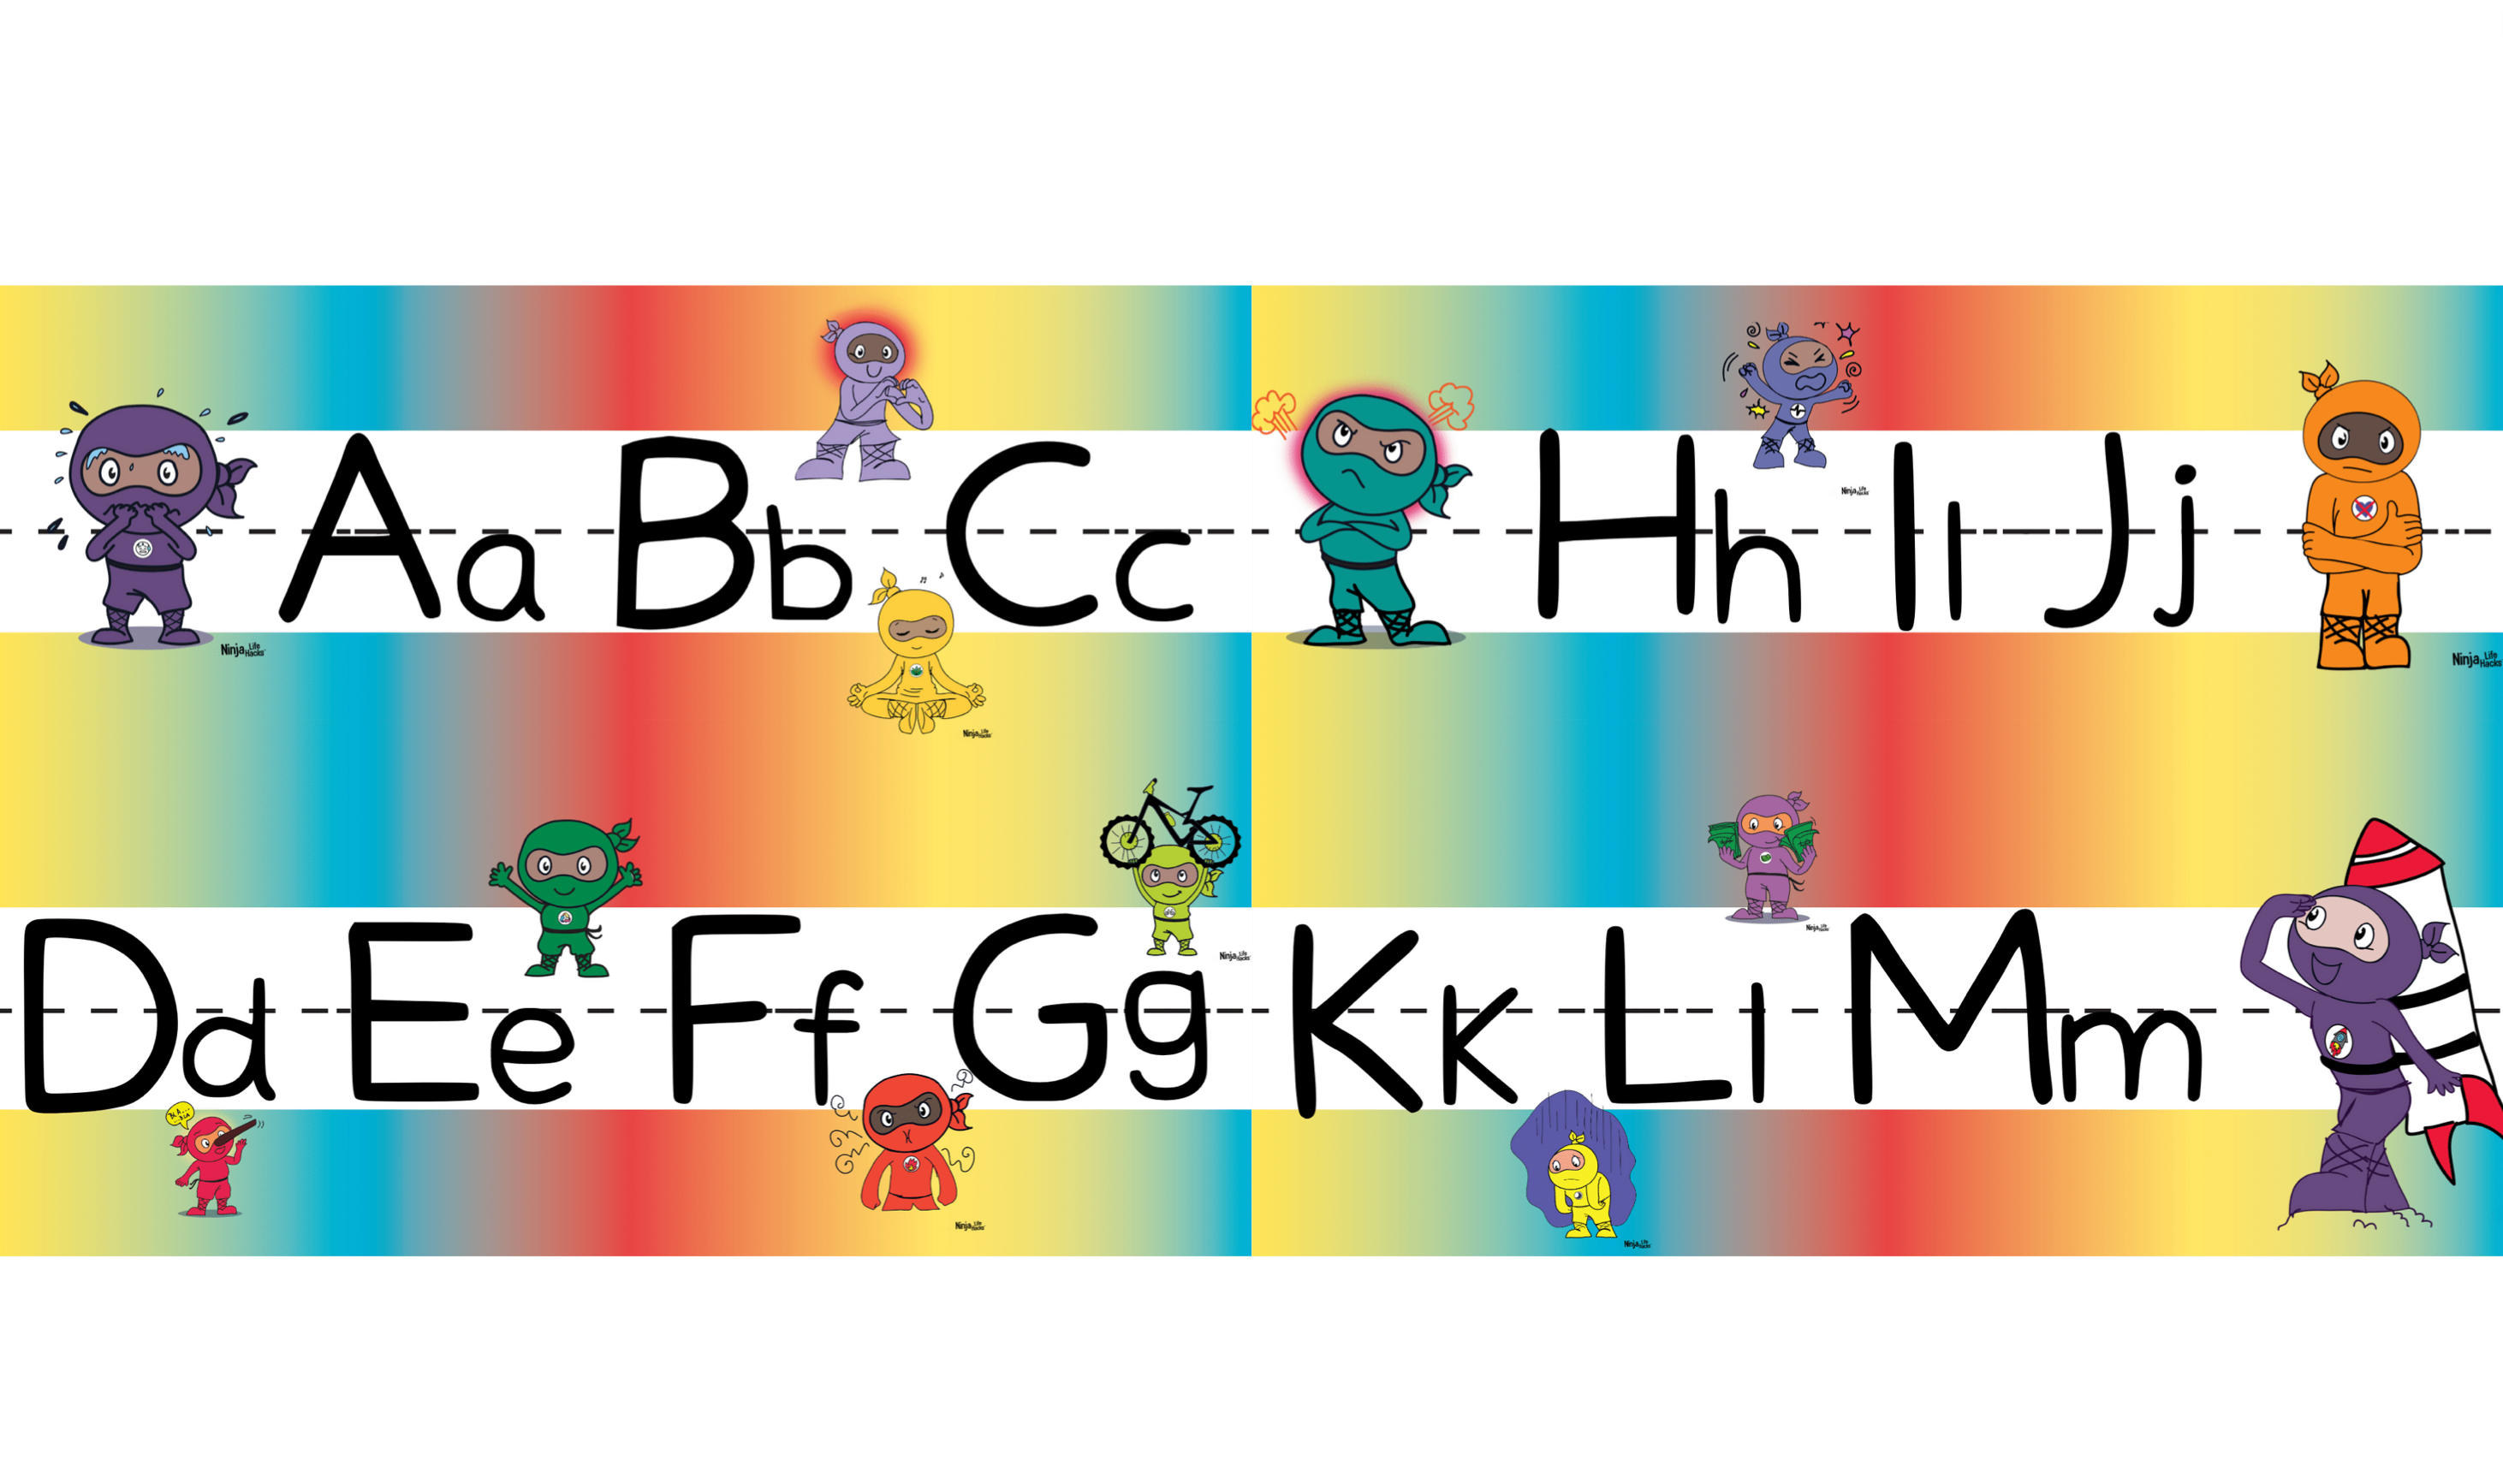 alphabet border printable